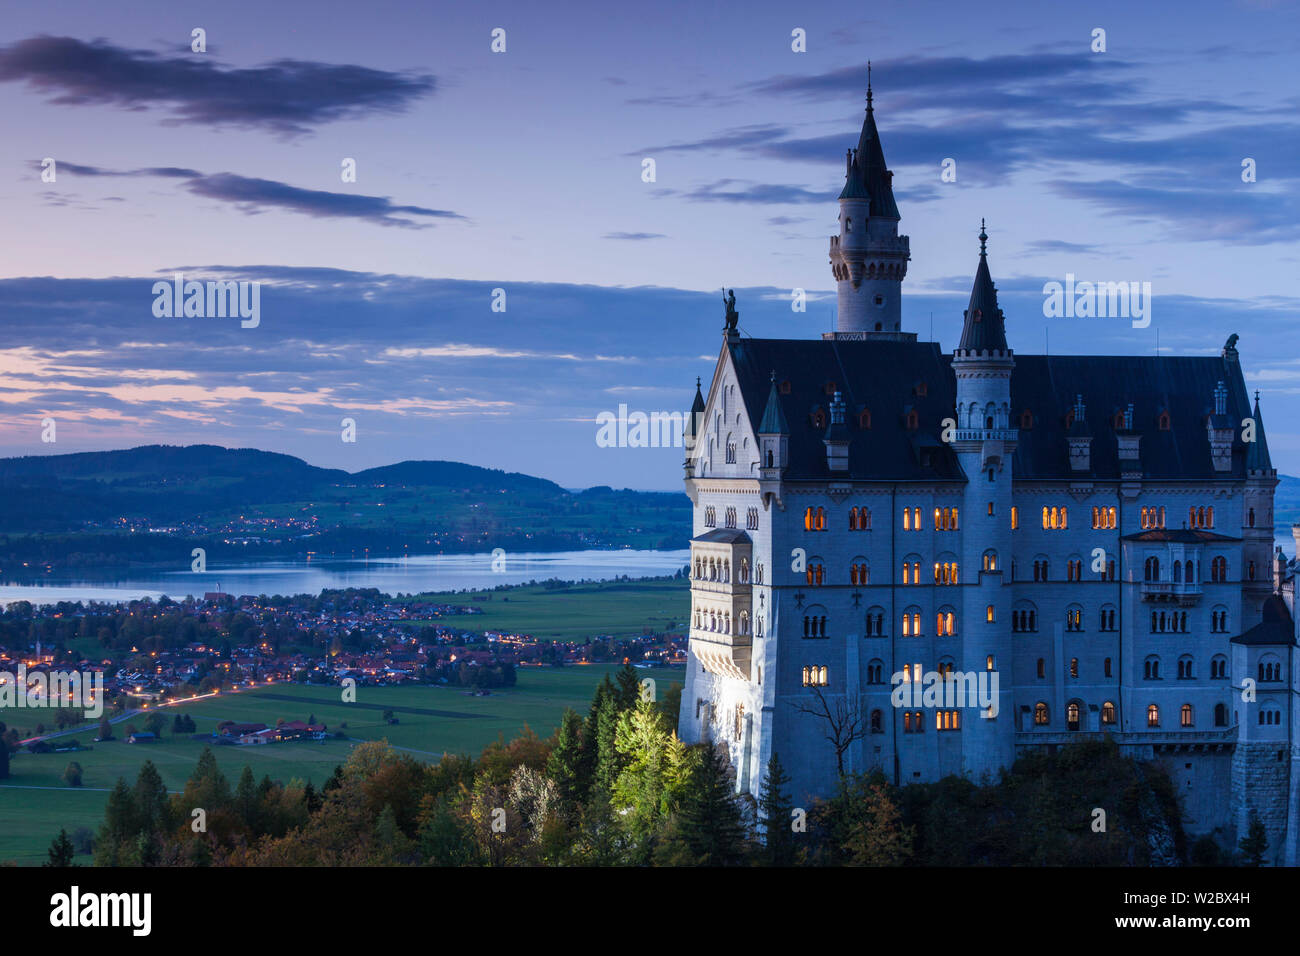 Germany, Bavaria, Hohenschwangau, Schloss Neuschwanstein castle, Marienbrucke bridge view, dusk Stock Photo